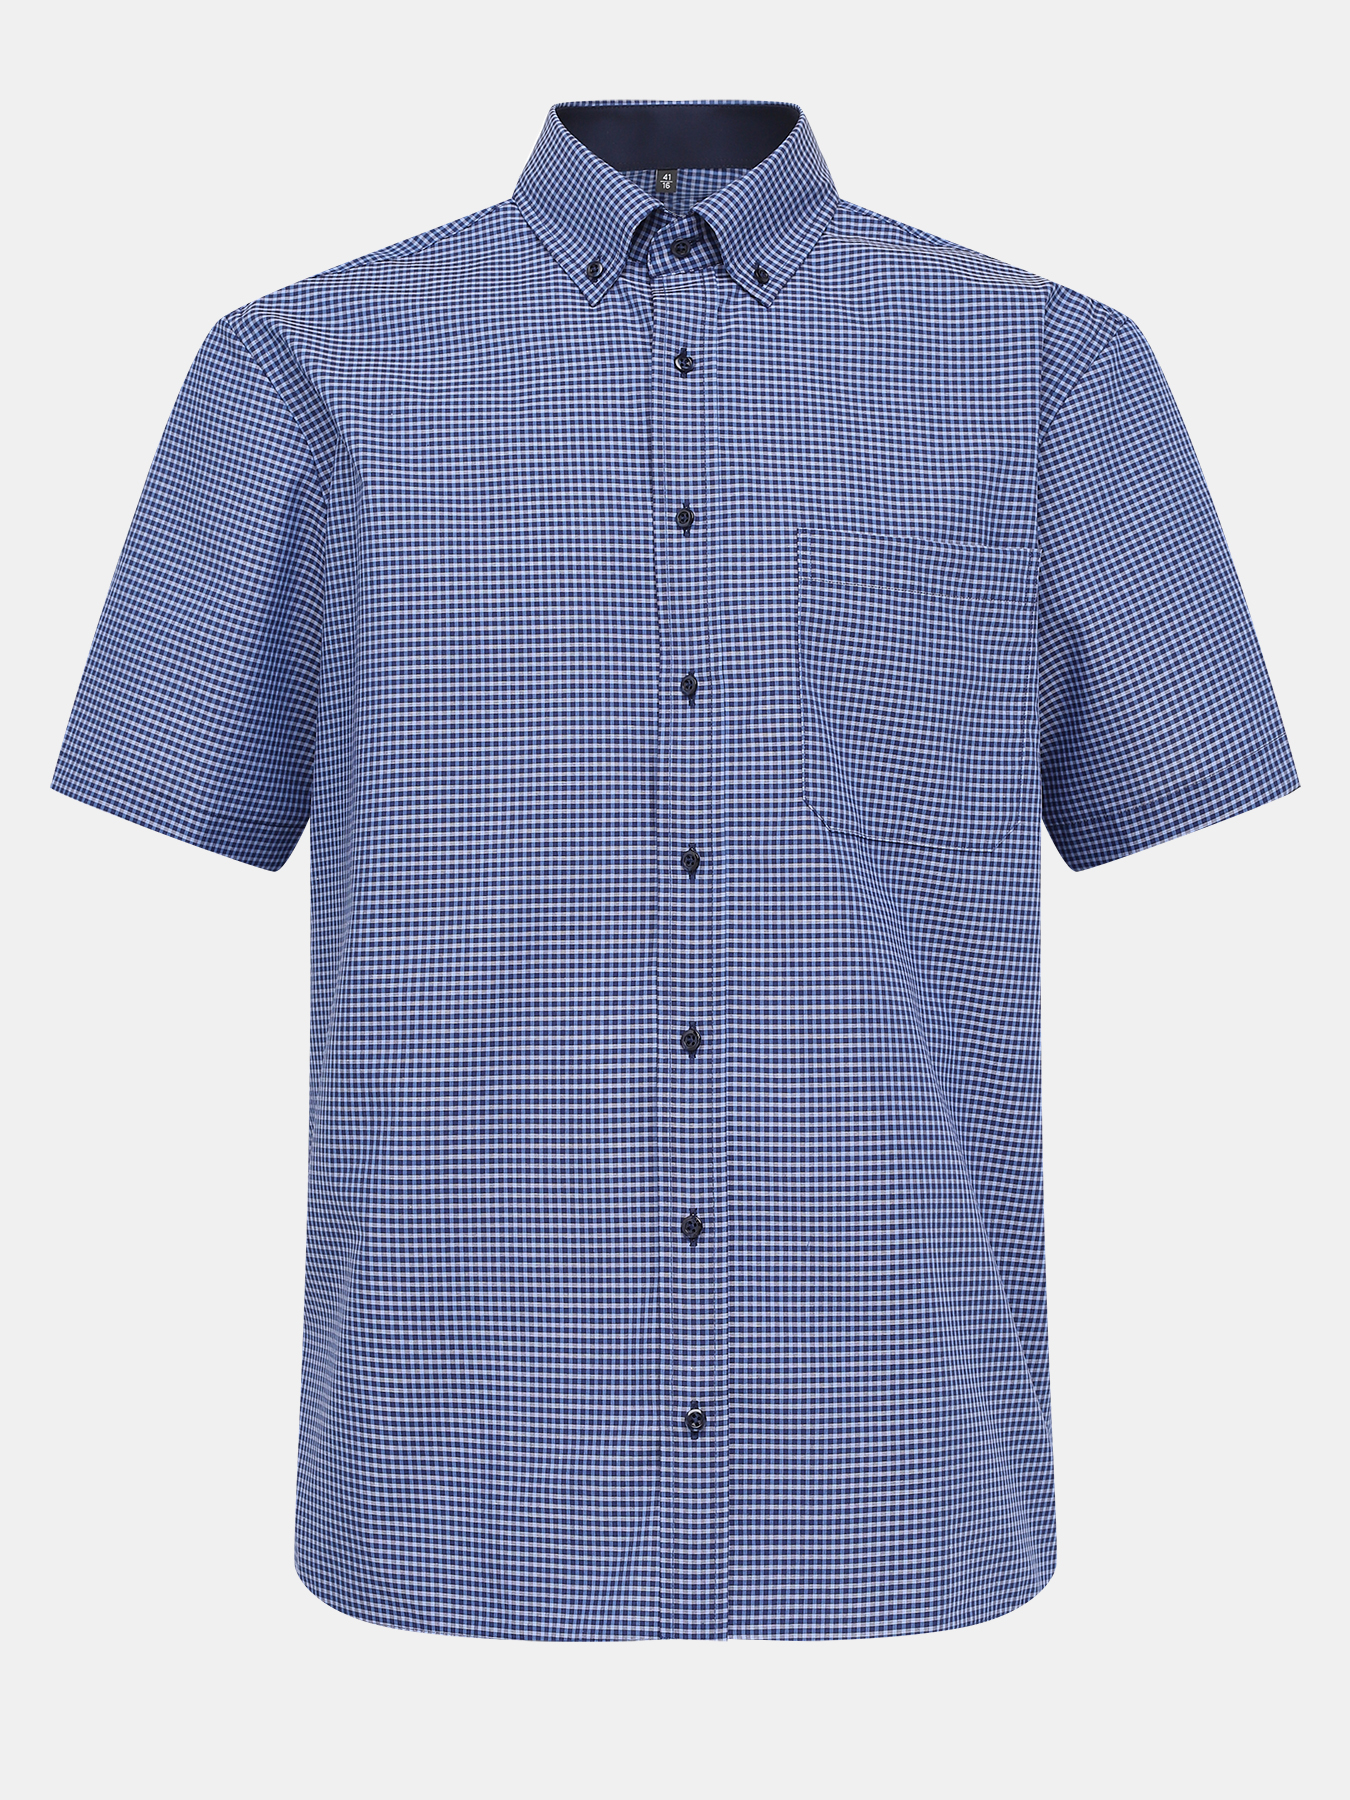 Рубашка Eterna 416186-240, цвет темно-синий, размер 64 - фото 1